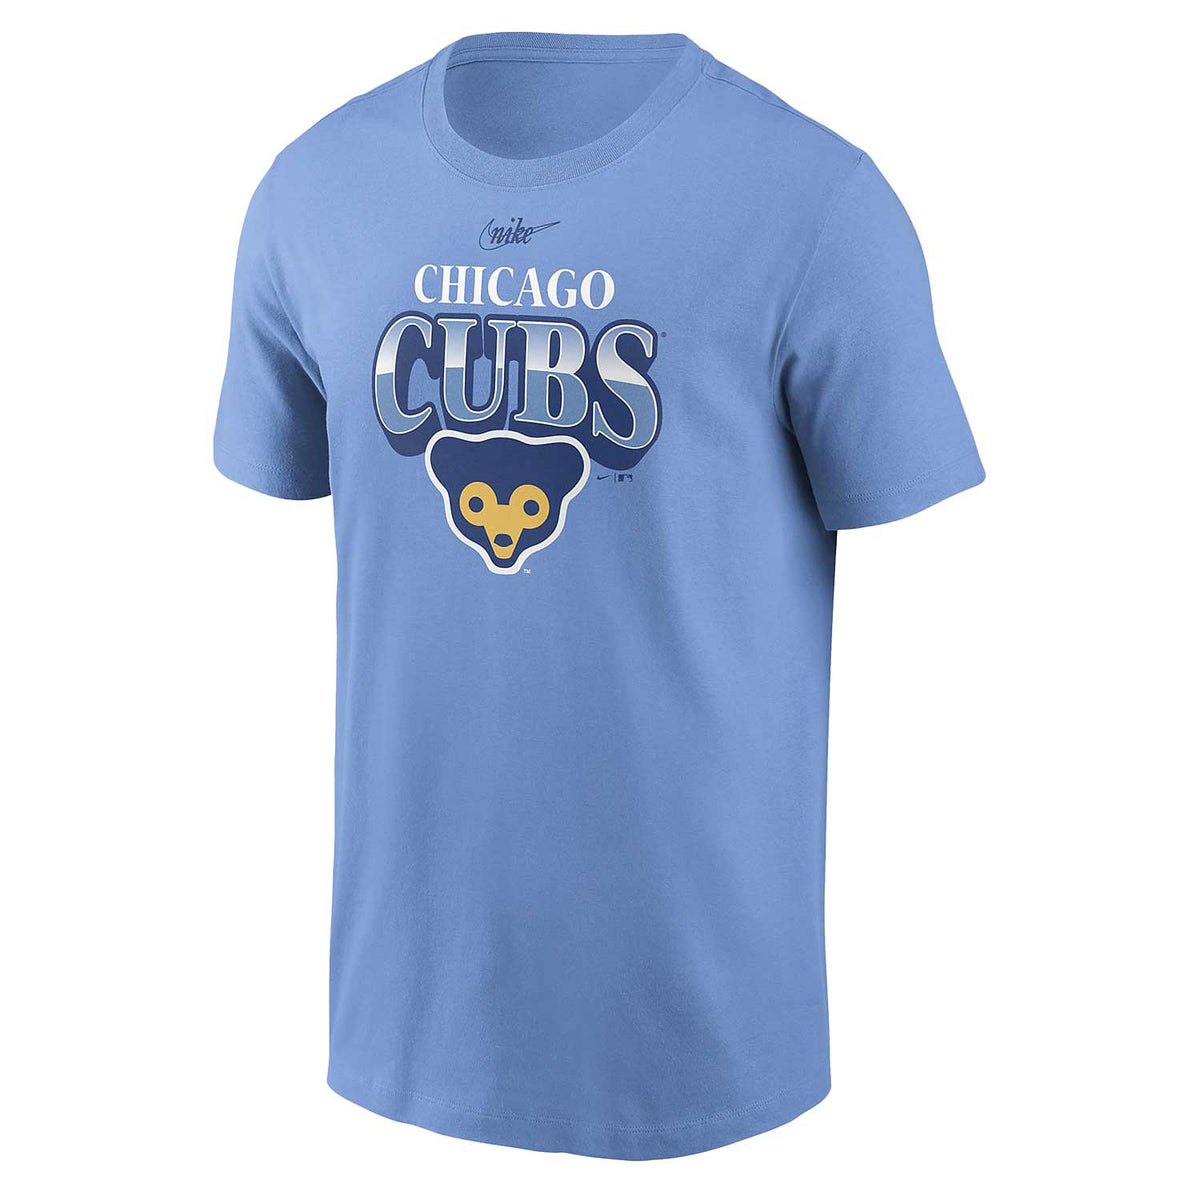 Nike Rewind Retro (MLB Chicago Cubs) Men's T-Shirt.